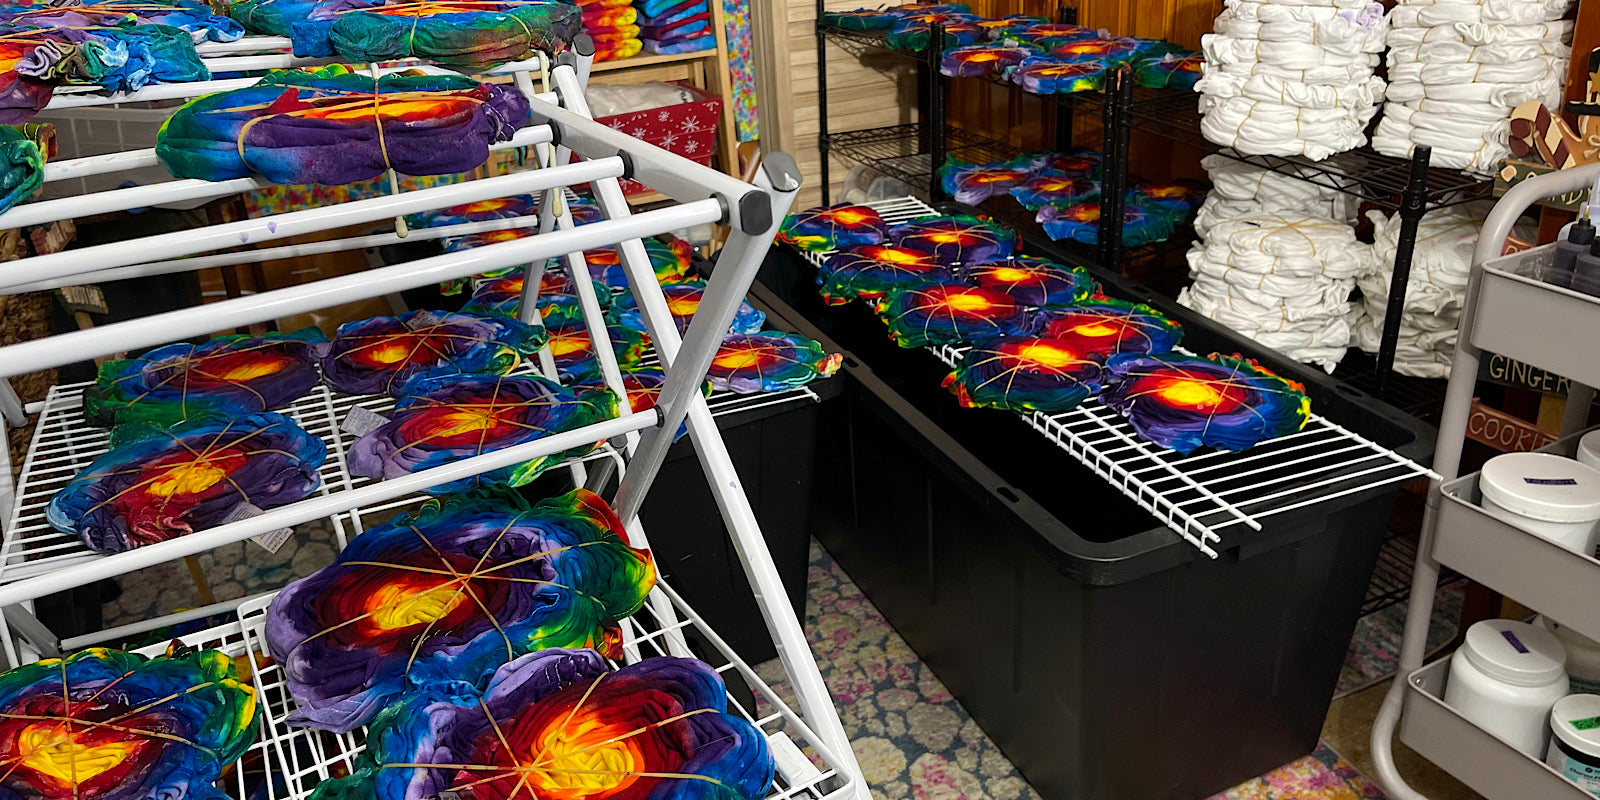 Dozens of rainbow sunburst tie dye tees in progress for a large custom order request, filling the entire studio workspace